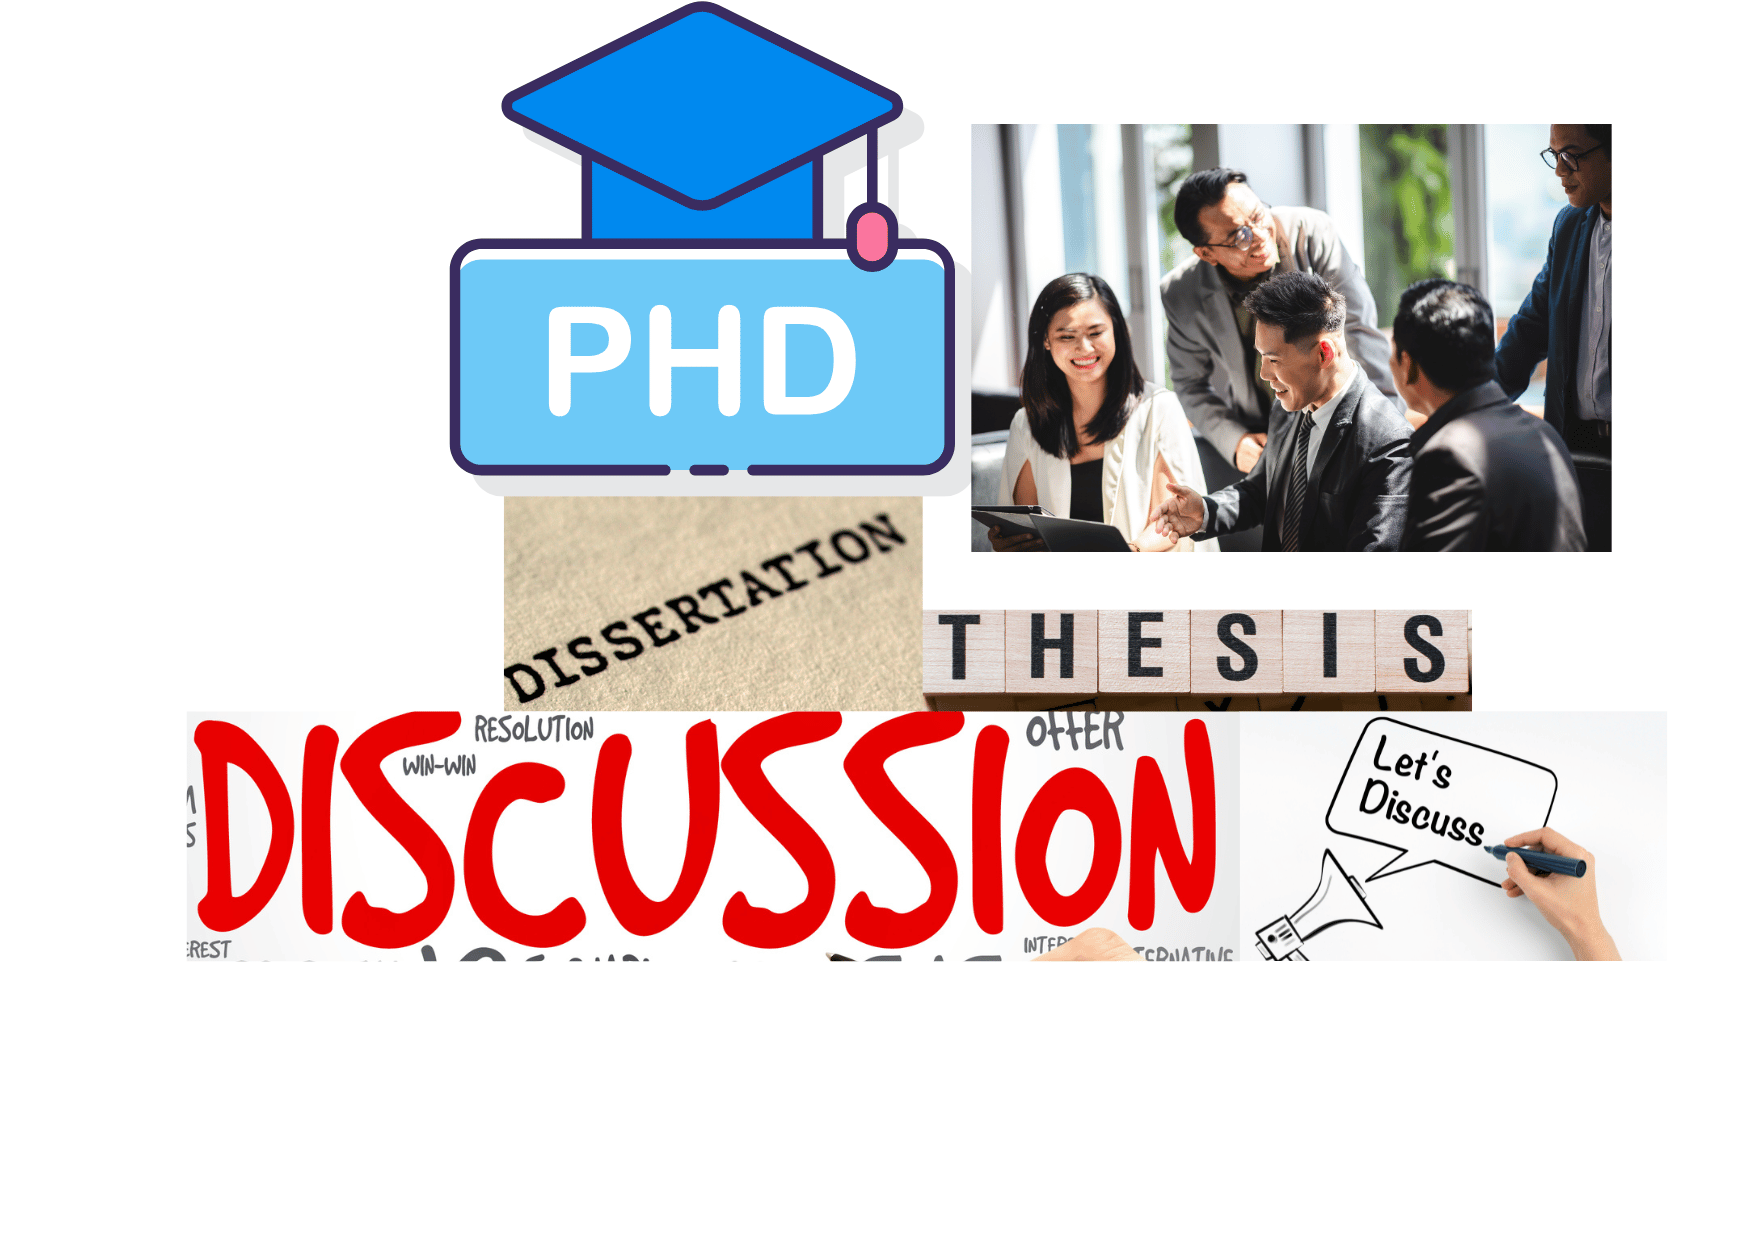 phd discussion forum